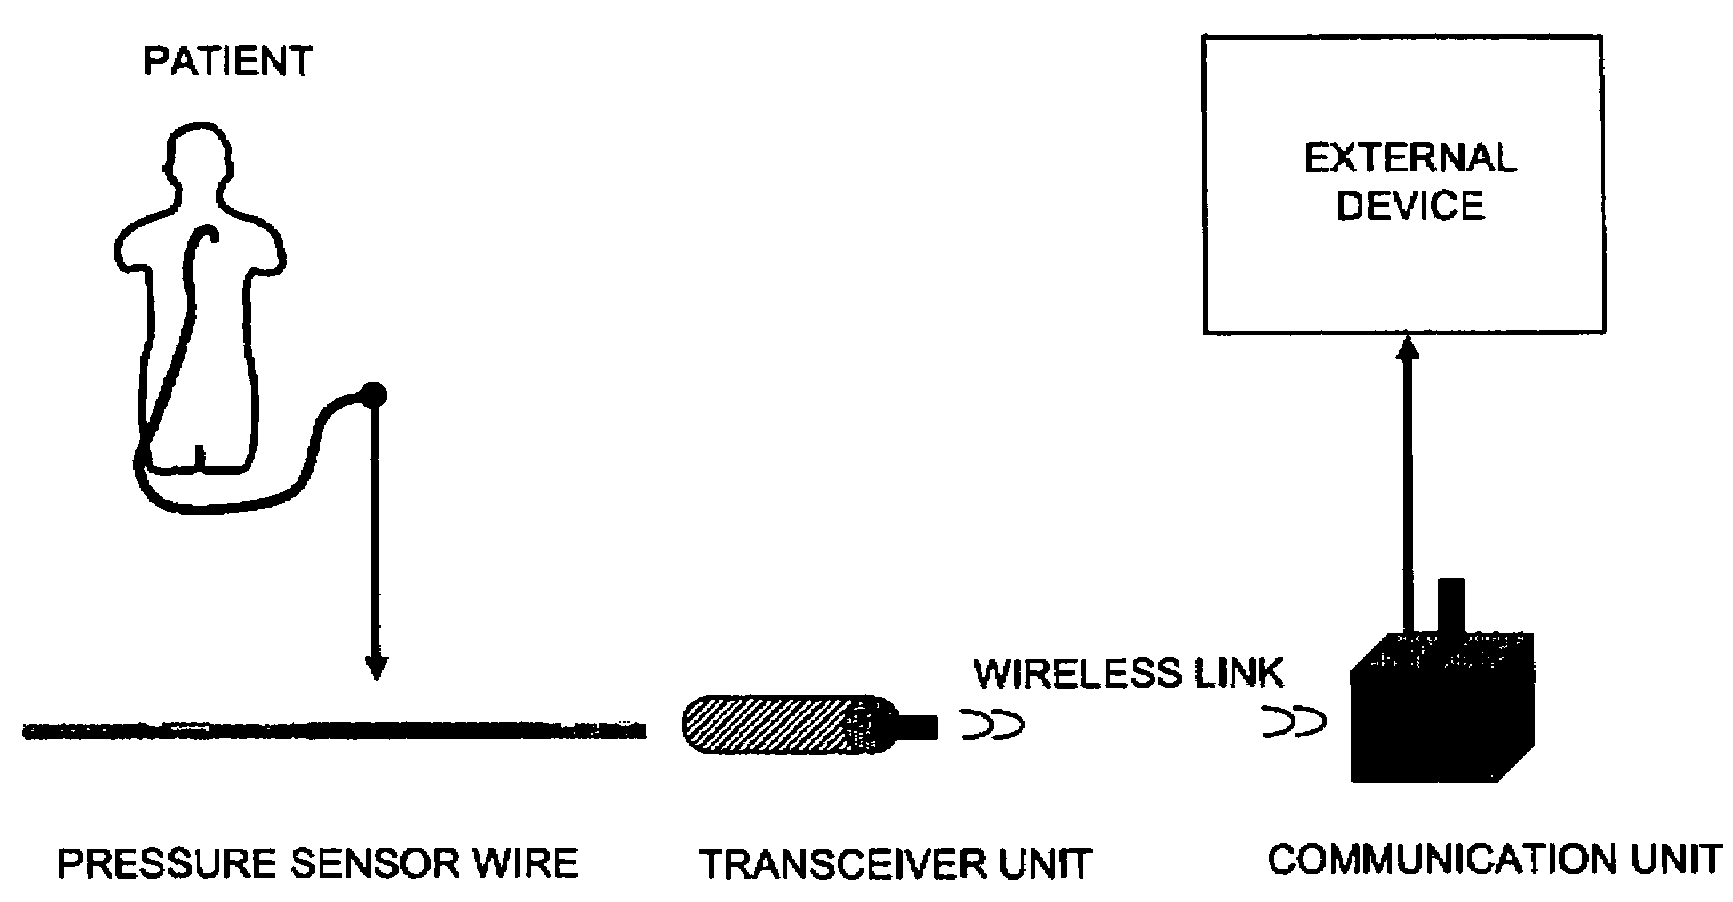 Transceiver unit in a pressure measurement system